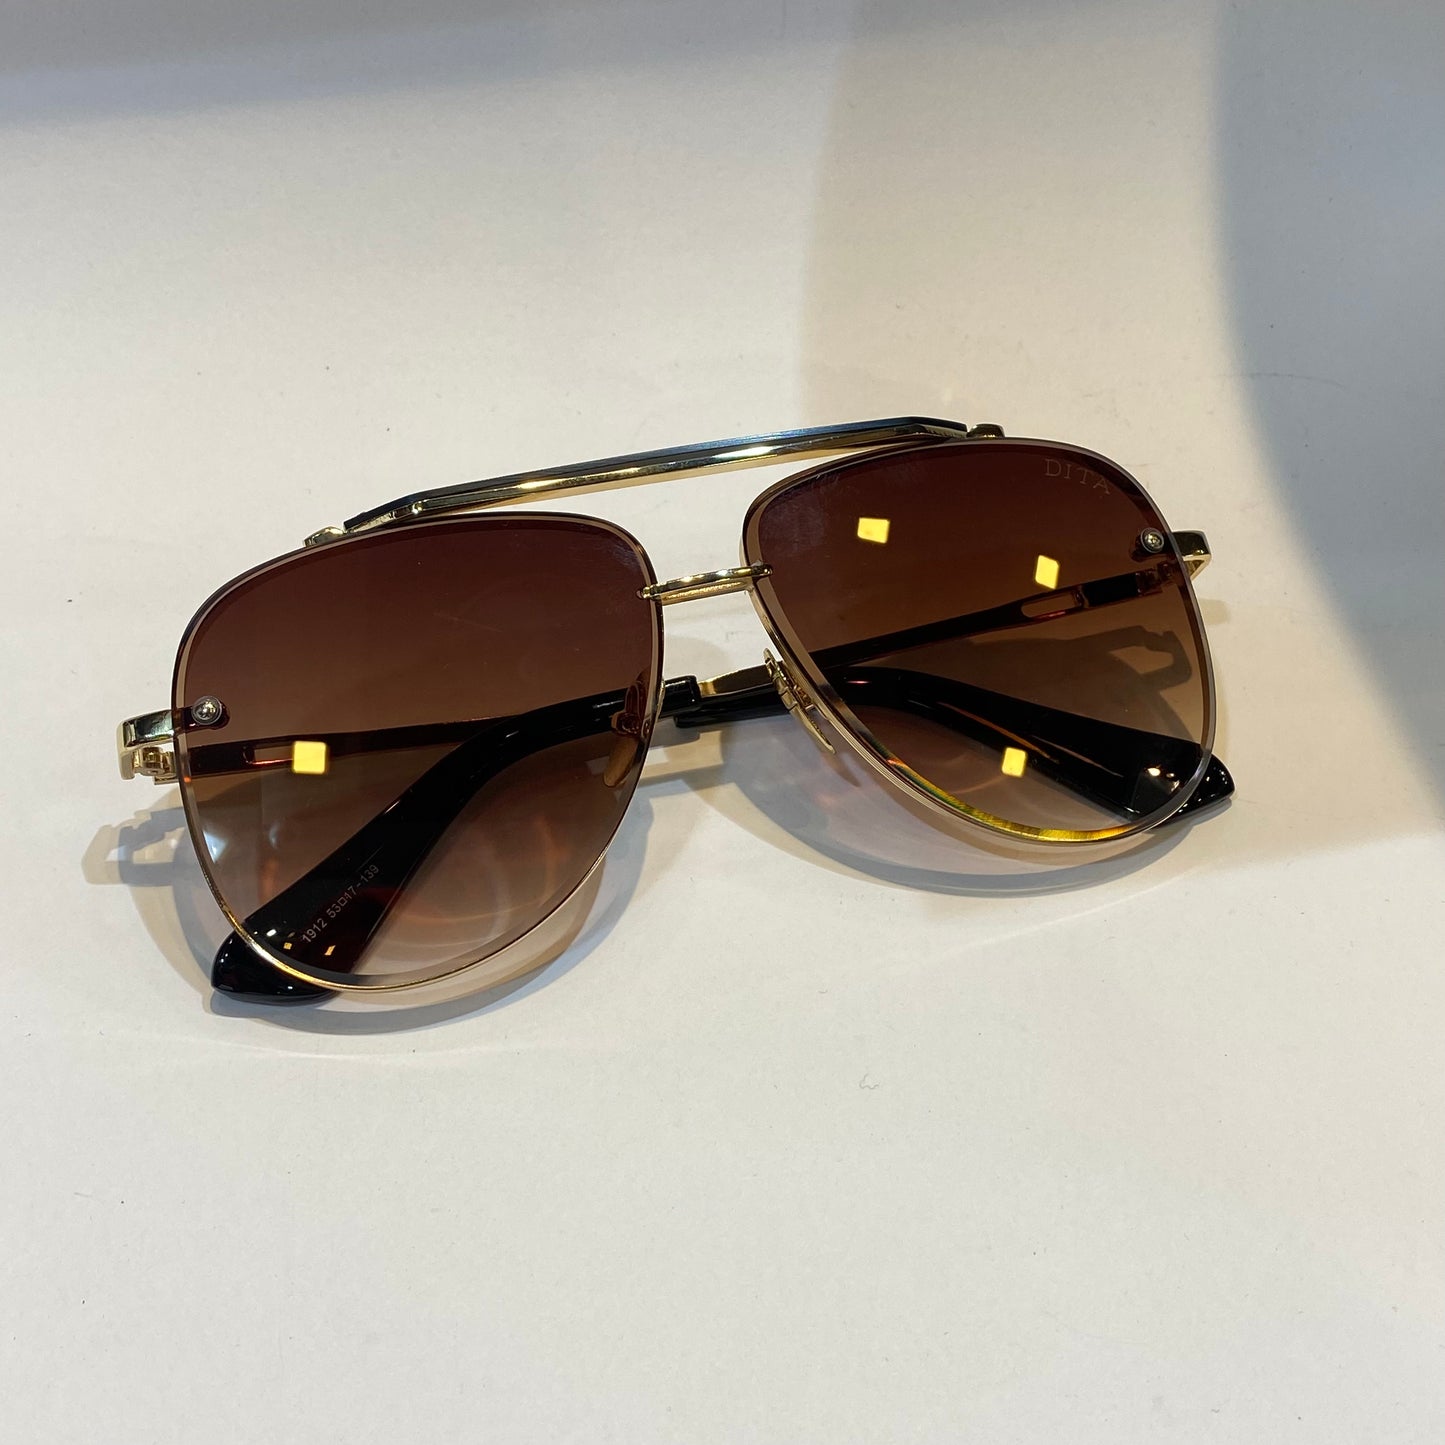 TID Gold Frame Browm Shade Unisex Branded Sunglasses 1912 53 17-139